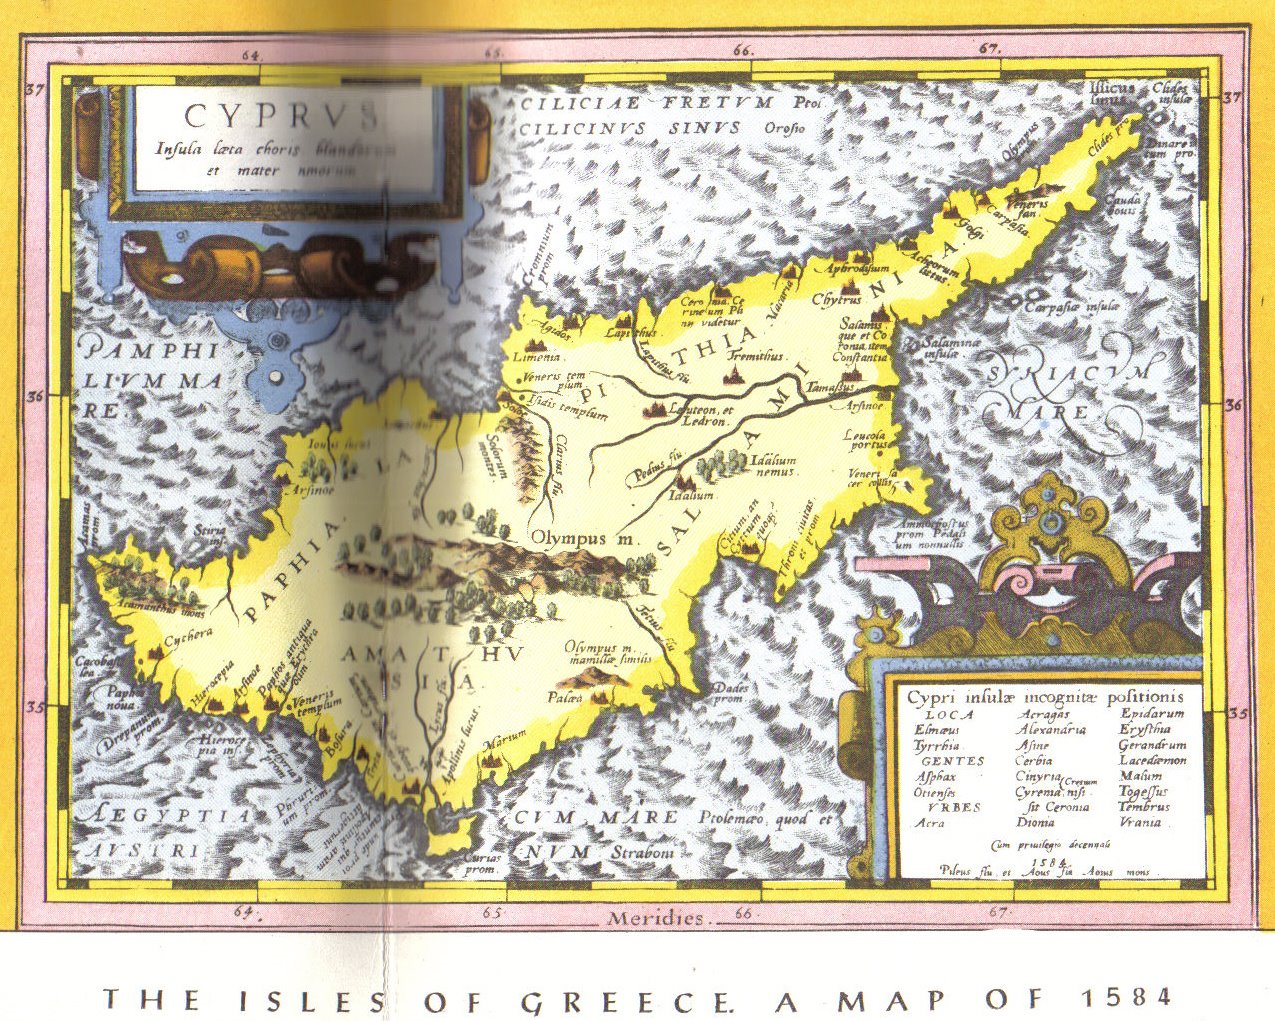 [(Pre)+Hellenic+CYPRUS+Map+1584.jpg]